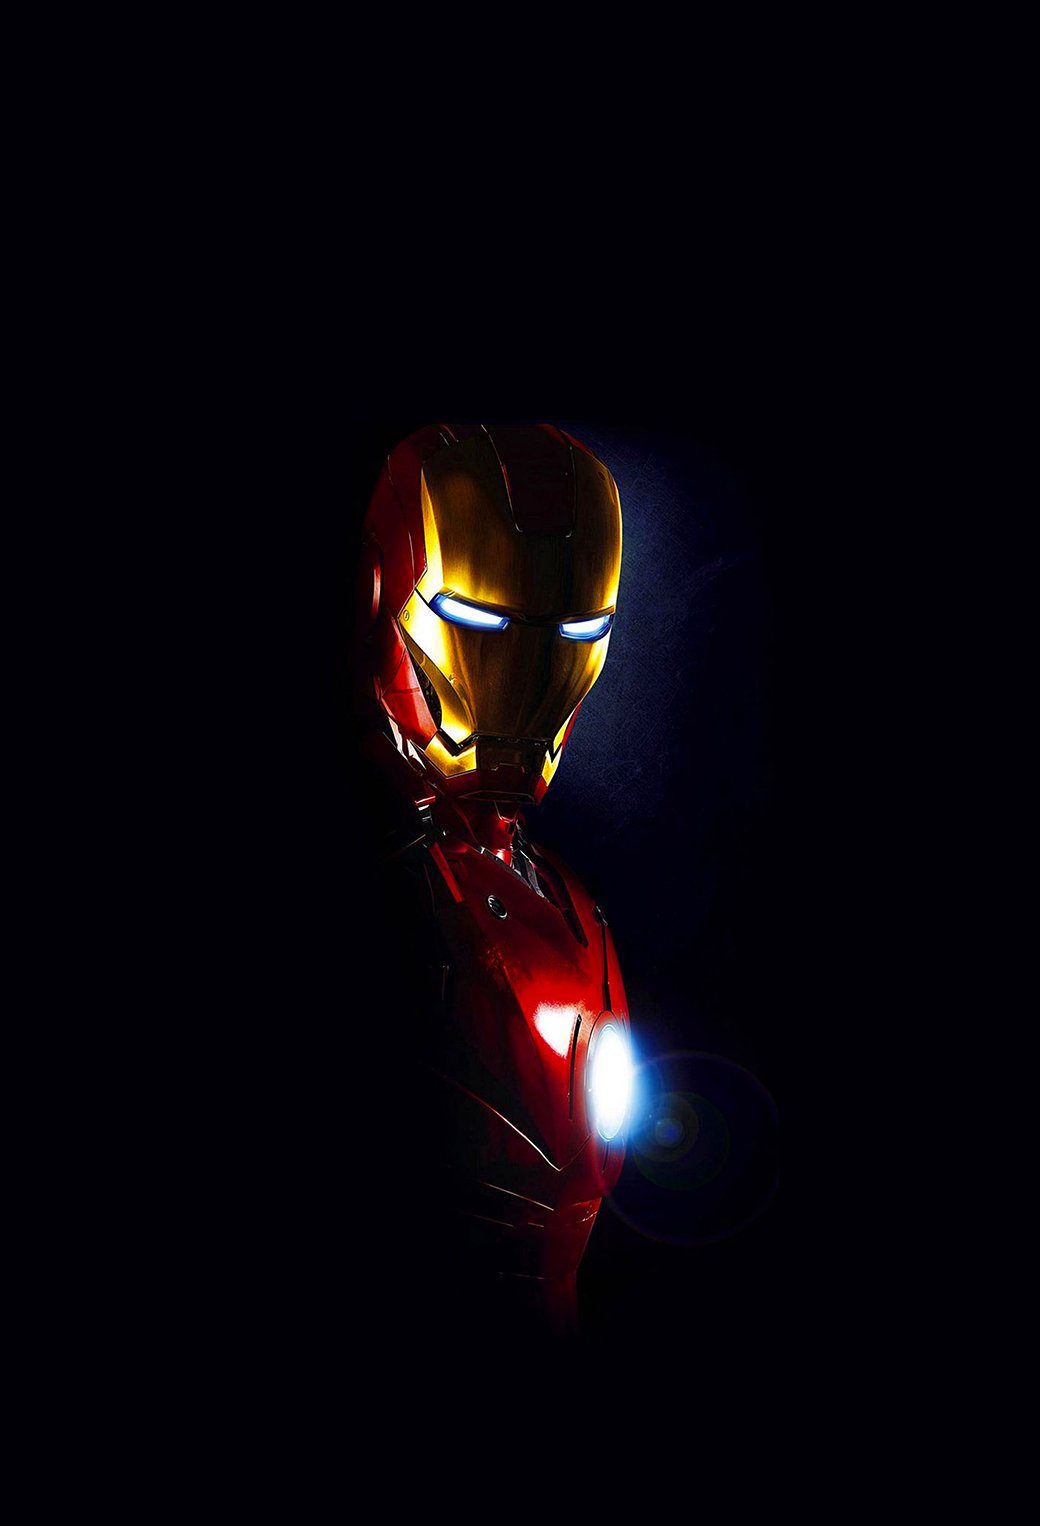 Iron Man in Dark Wallpaper for iPhone Pro Max, X, 6